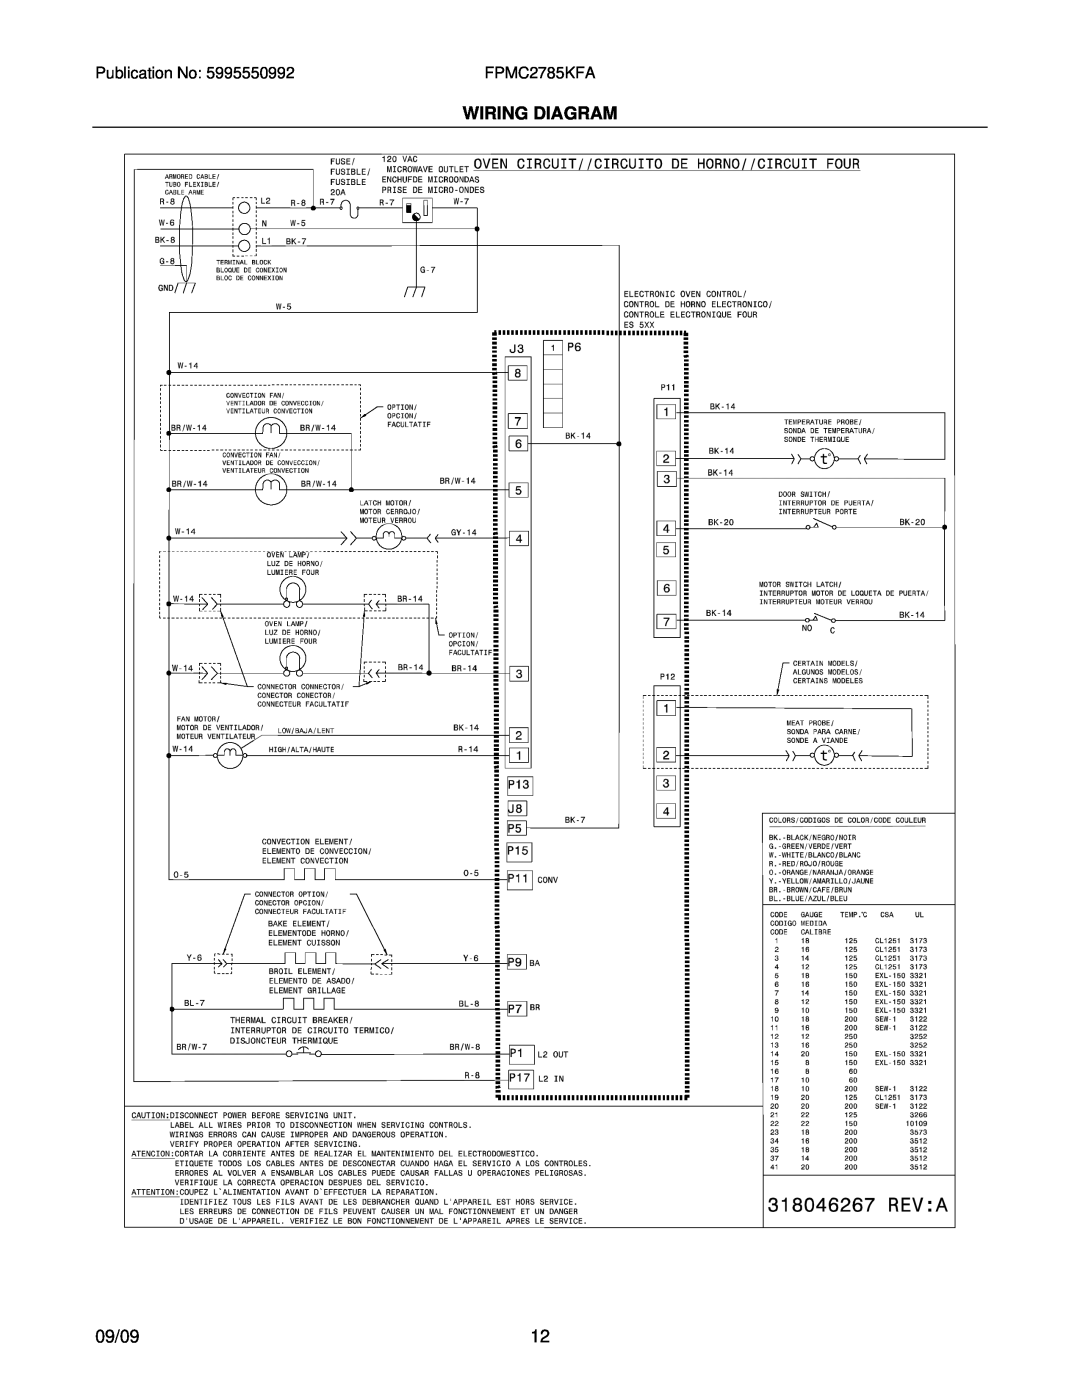 Frigidaire FPMC2785K installation instructions Wiring Diagram, 09/09 